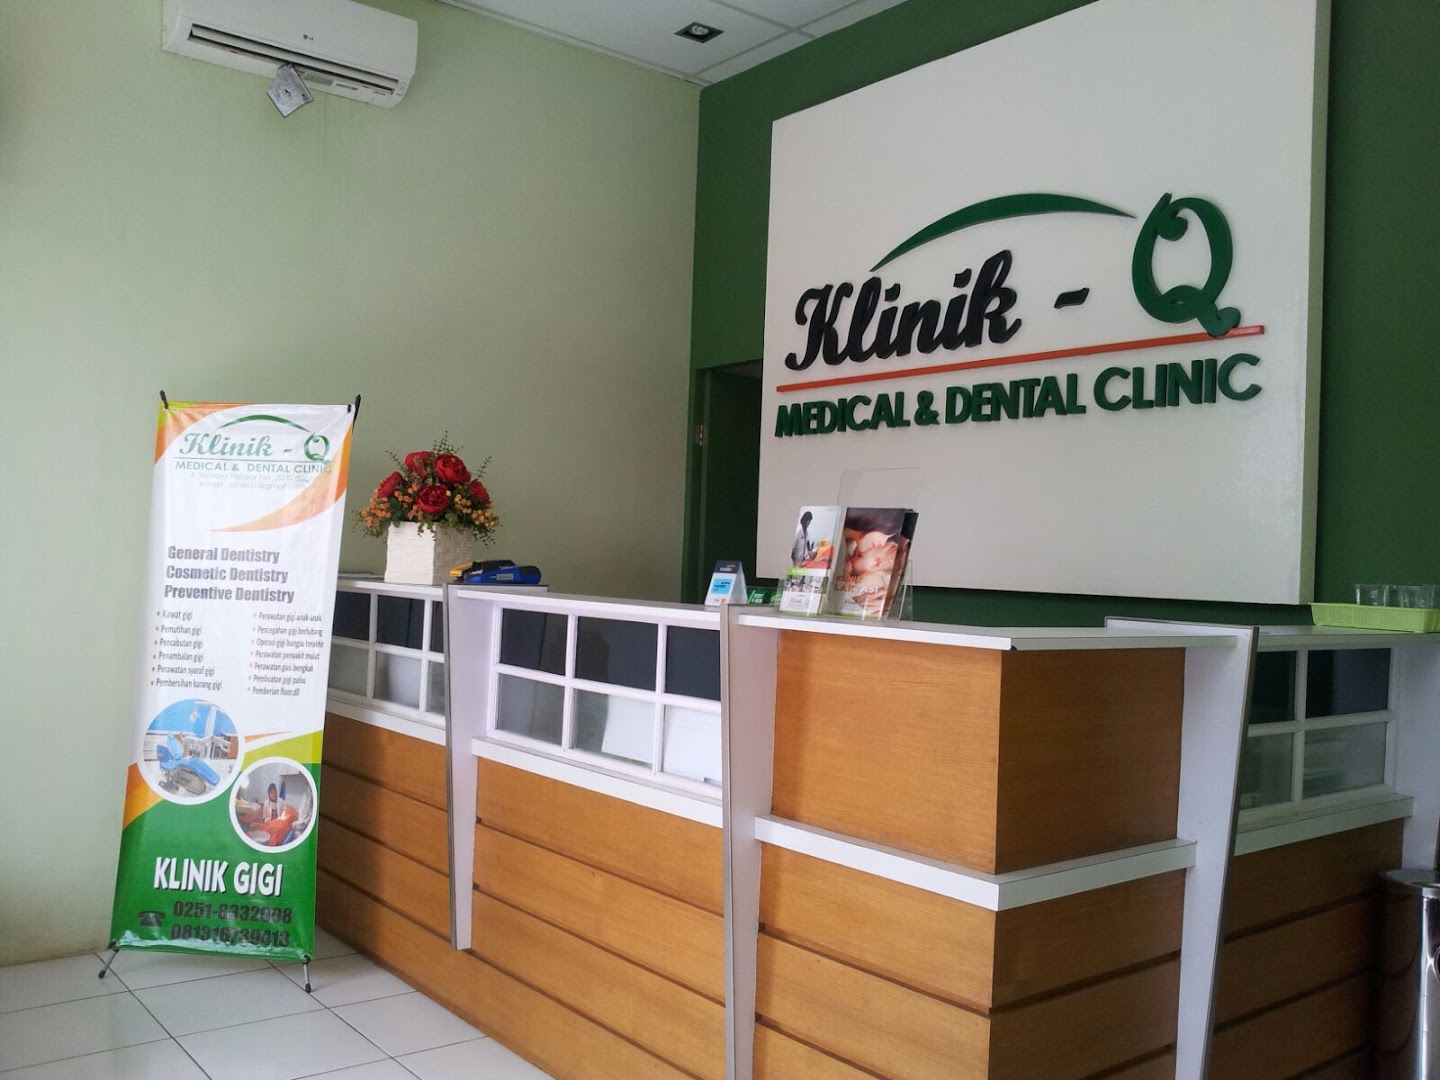 Klinik - Q Medical N Dental Clinic Photo